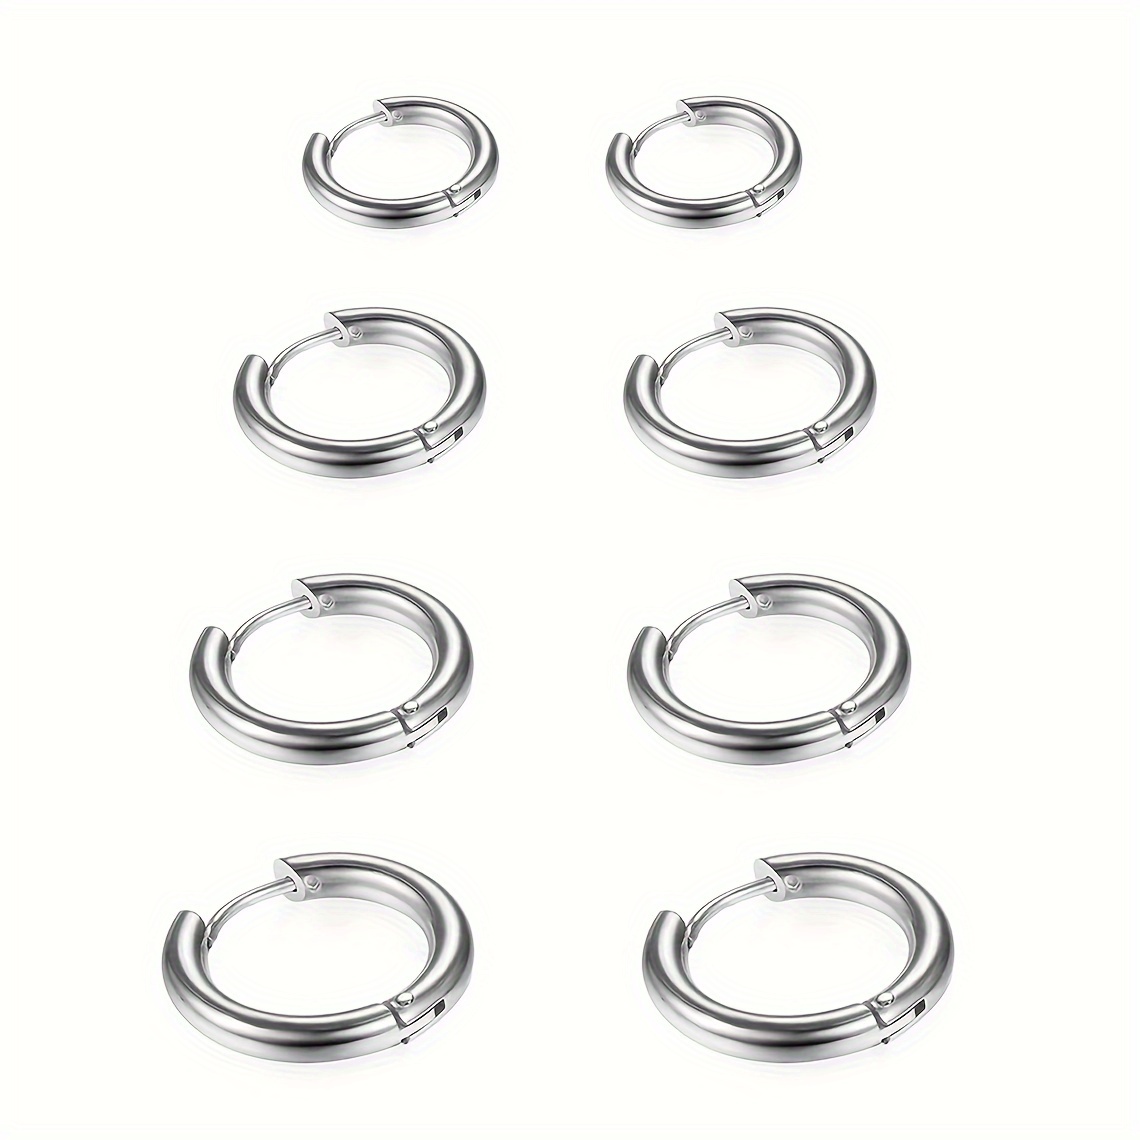 

Stainless Steel Hoop Earrings For Men Minimalist Huggie Earrings Black Hypoallergenic Small Hypoallergenic Earrings Hoop Cartilage Helix Lobes Hinged Sleeper Earrings 8mm 10mm 12mm 14mm